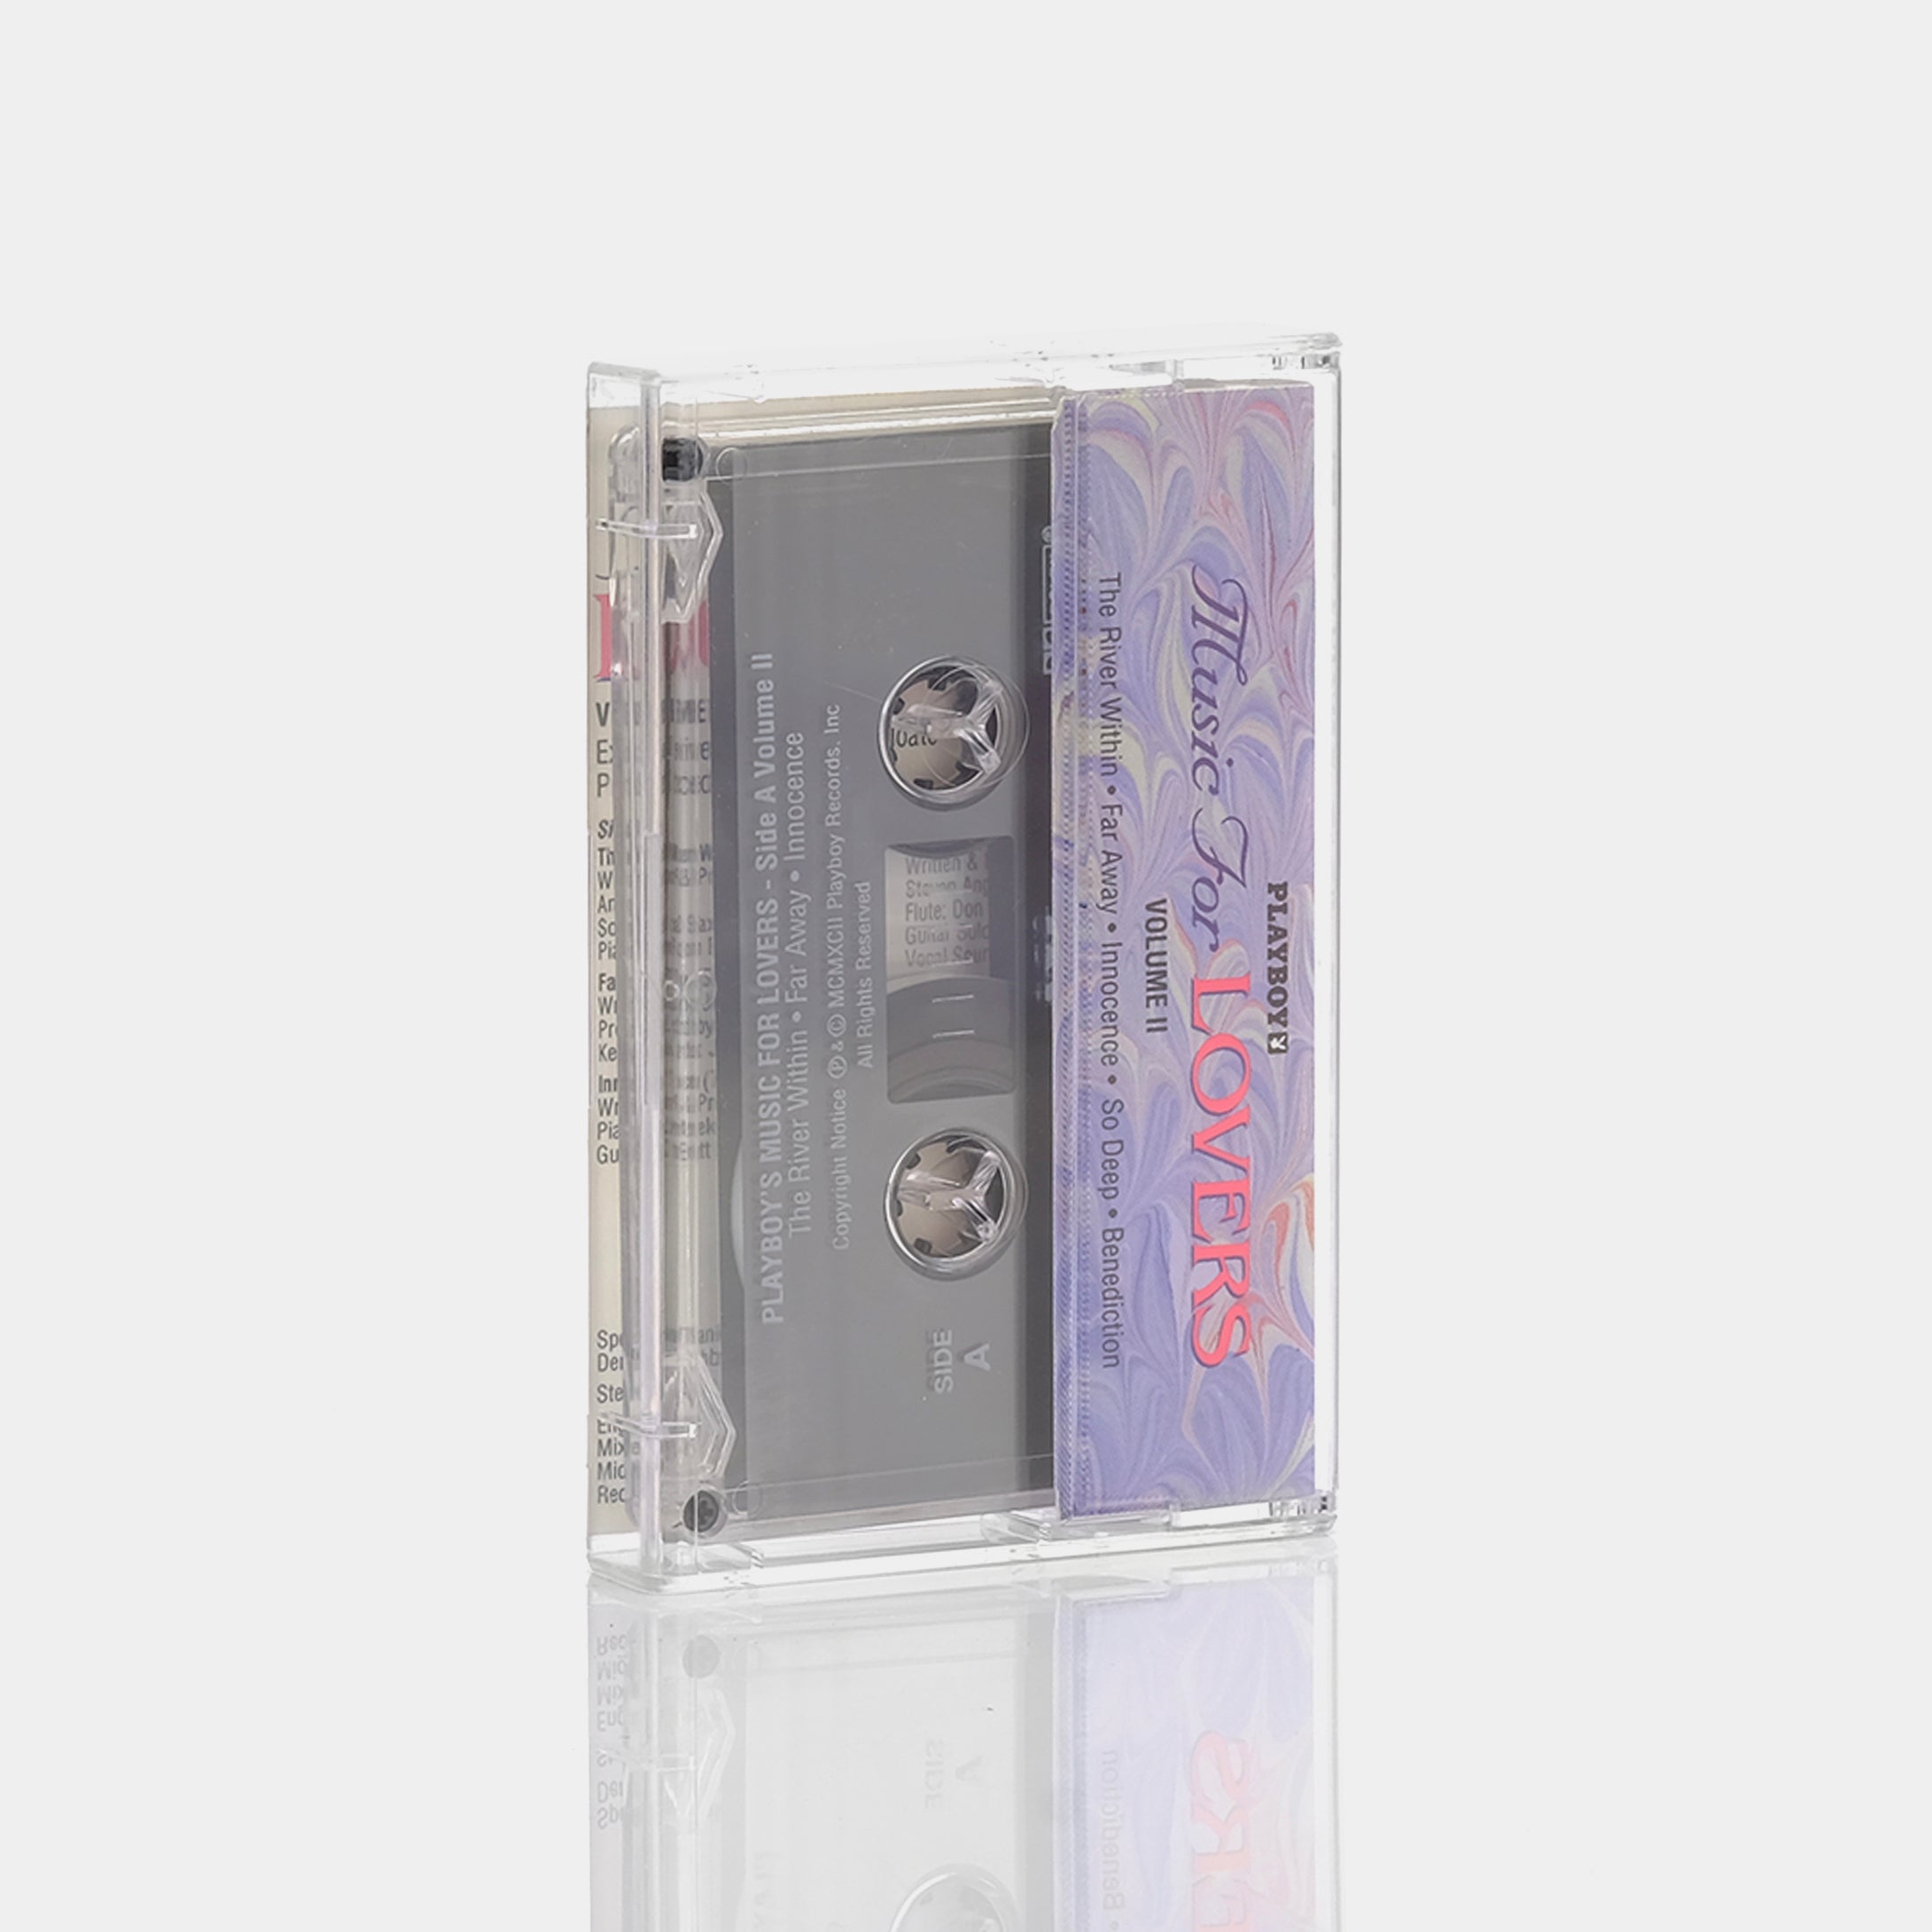 Playboy Music for Lovers Cassette Tape